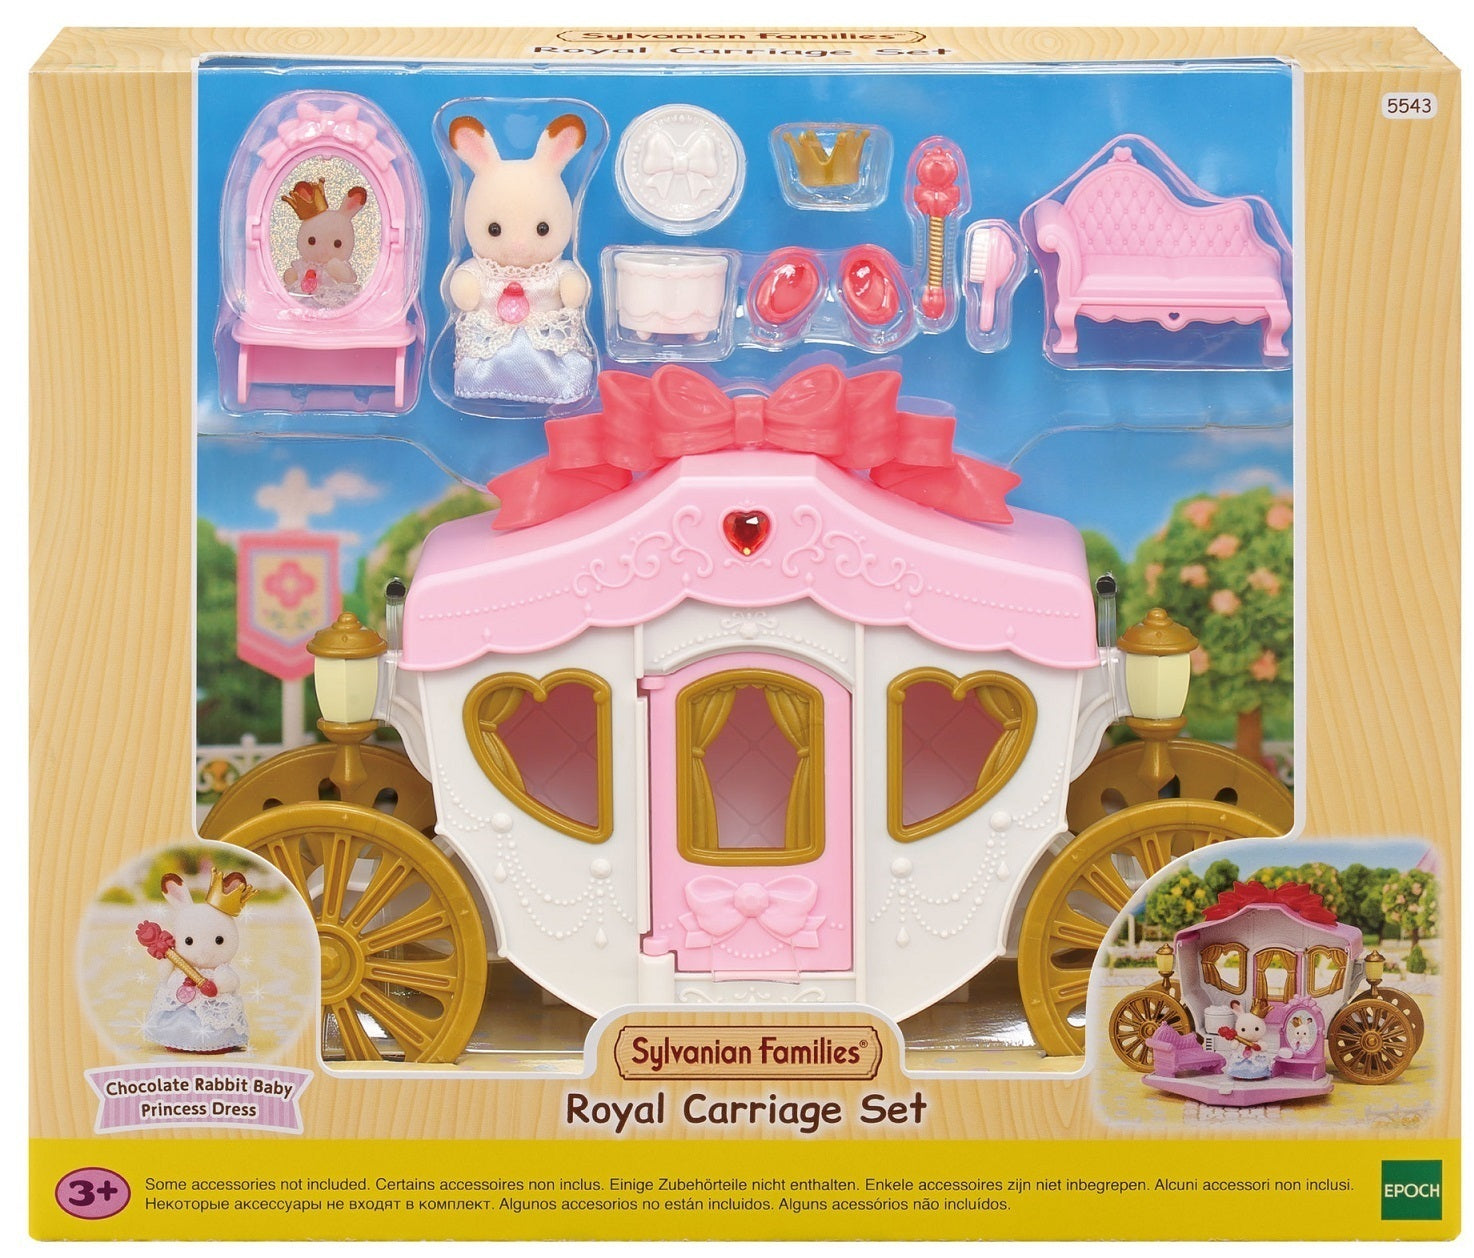 SF5543 Royal Carriage Set